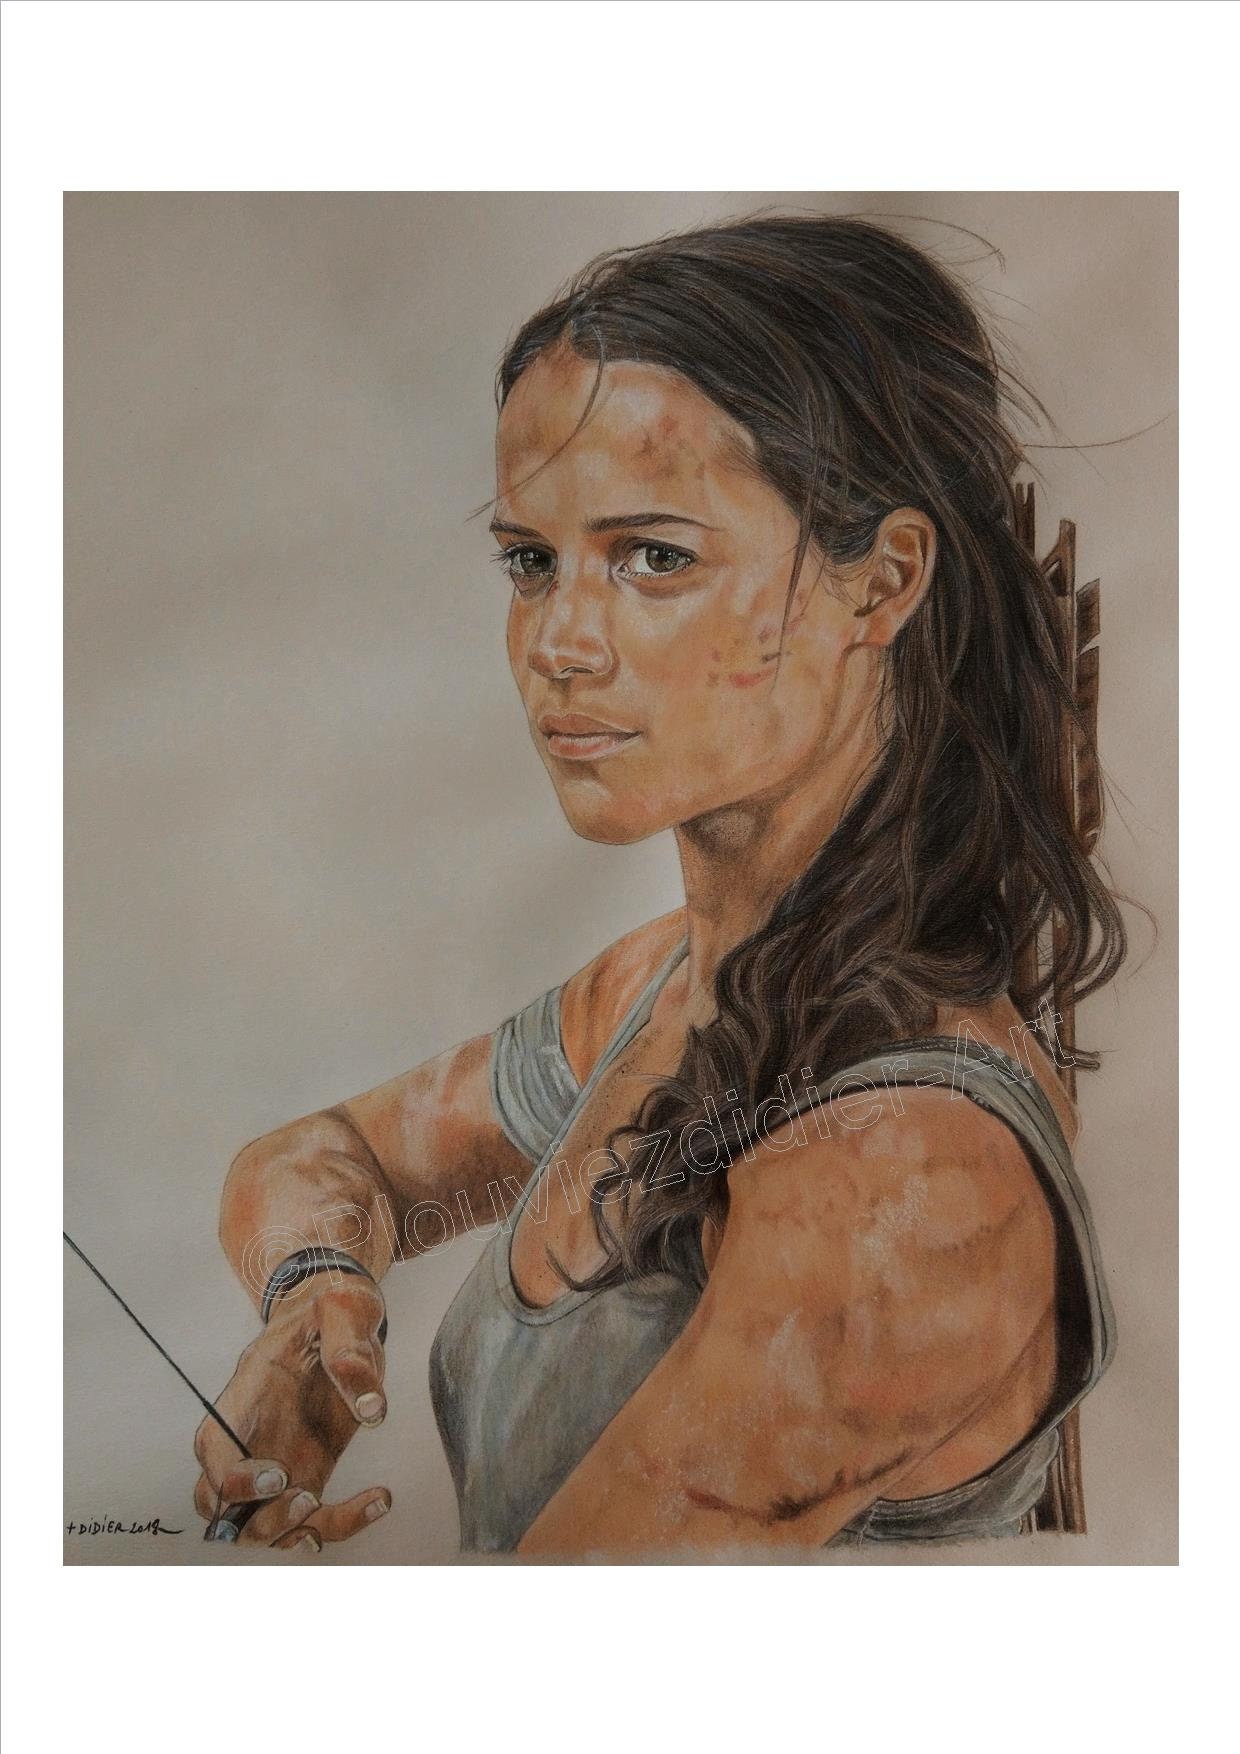 Novo filme Tomb Raider tem Alicia Vikander como Lara Croft